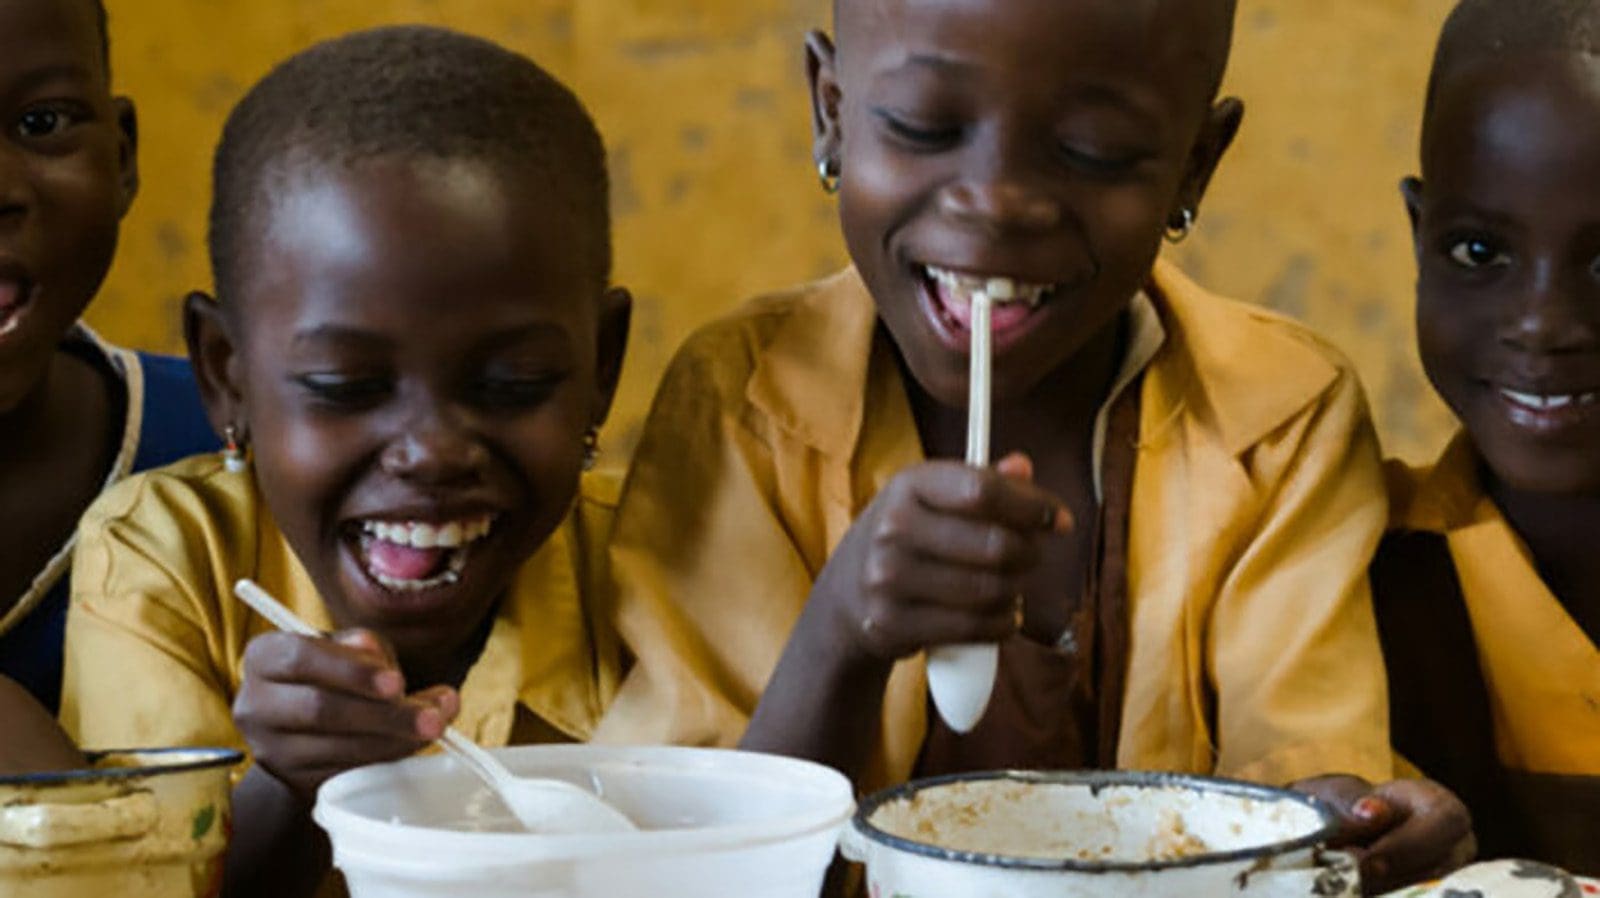 Novo Nordisk Foundation supports WFP’s school feeding program in Rwanda, Uganda with US$4m